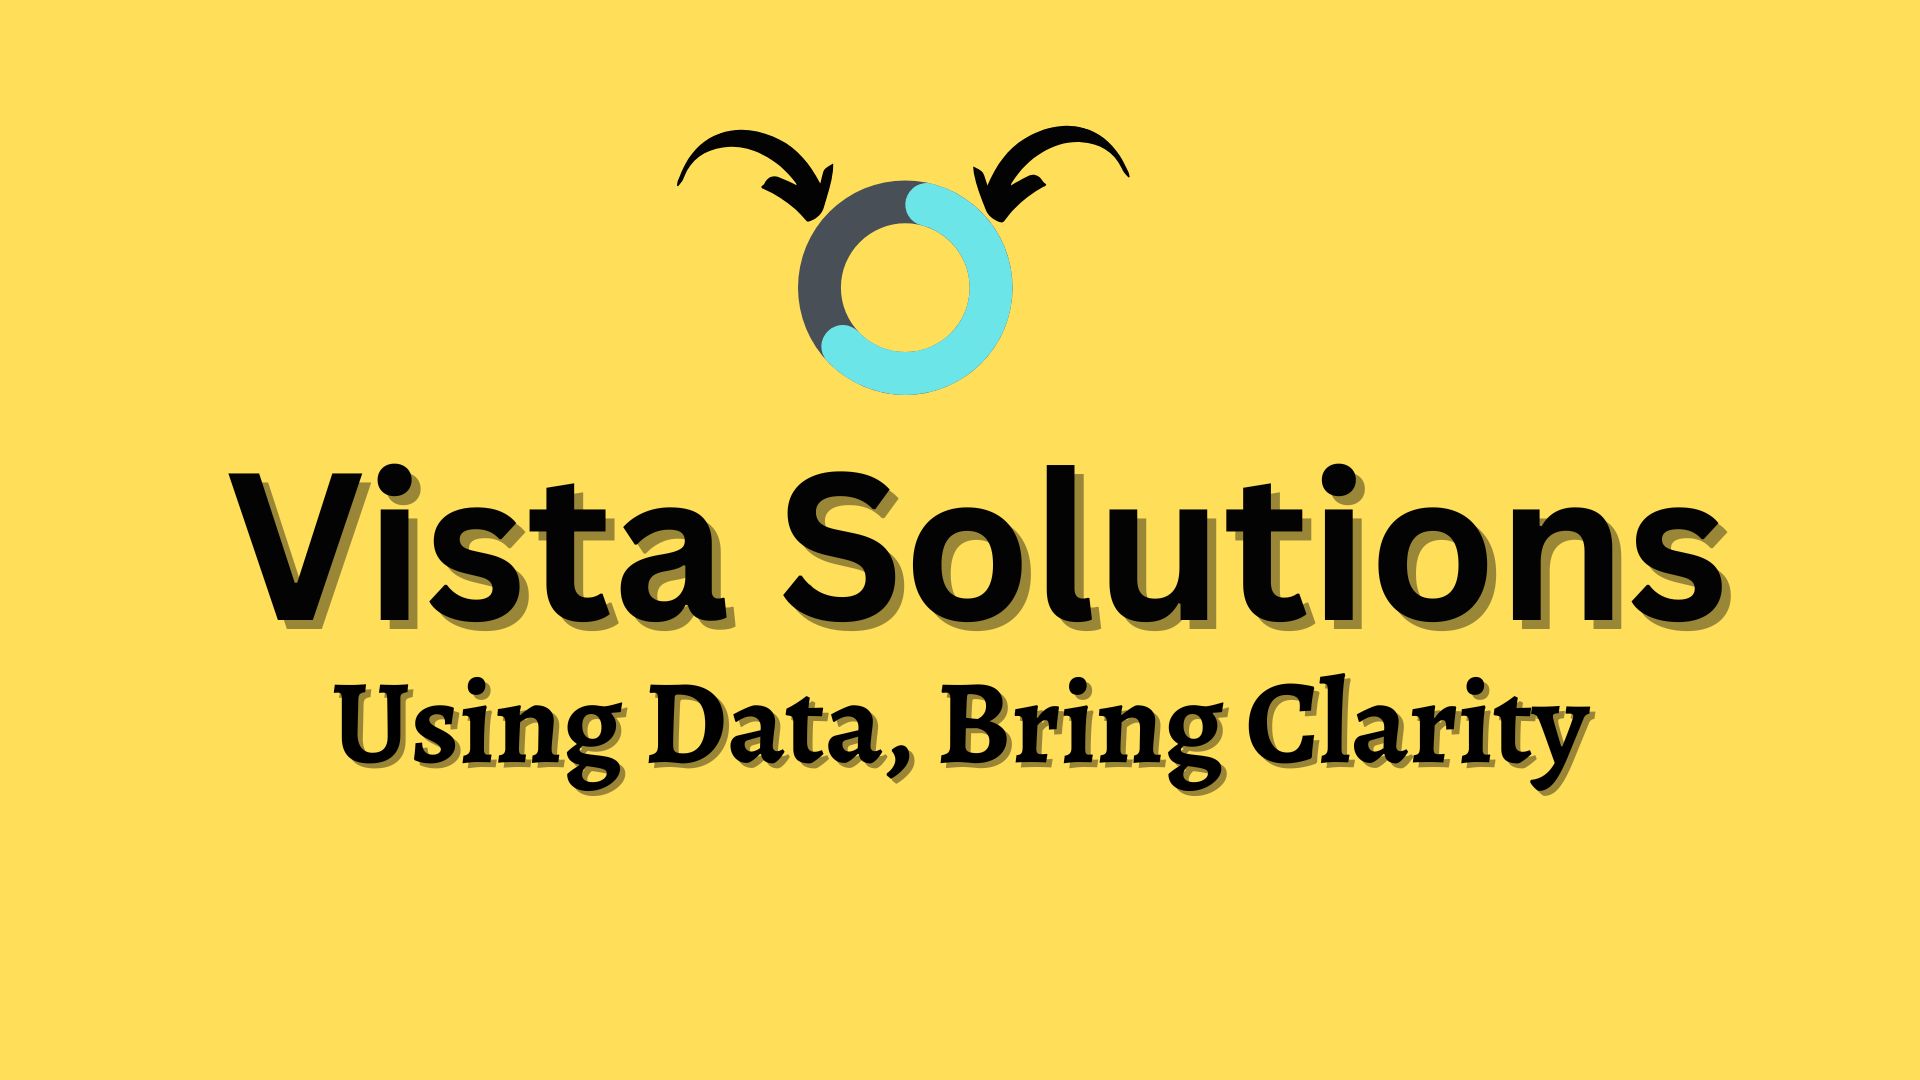 Using Data, Bring Clarity